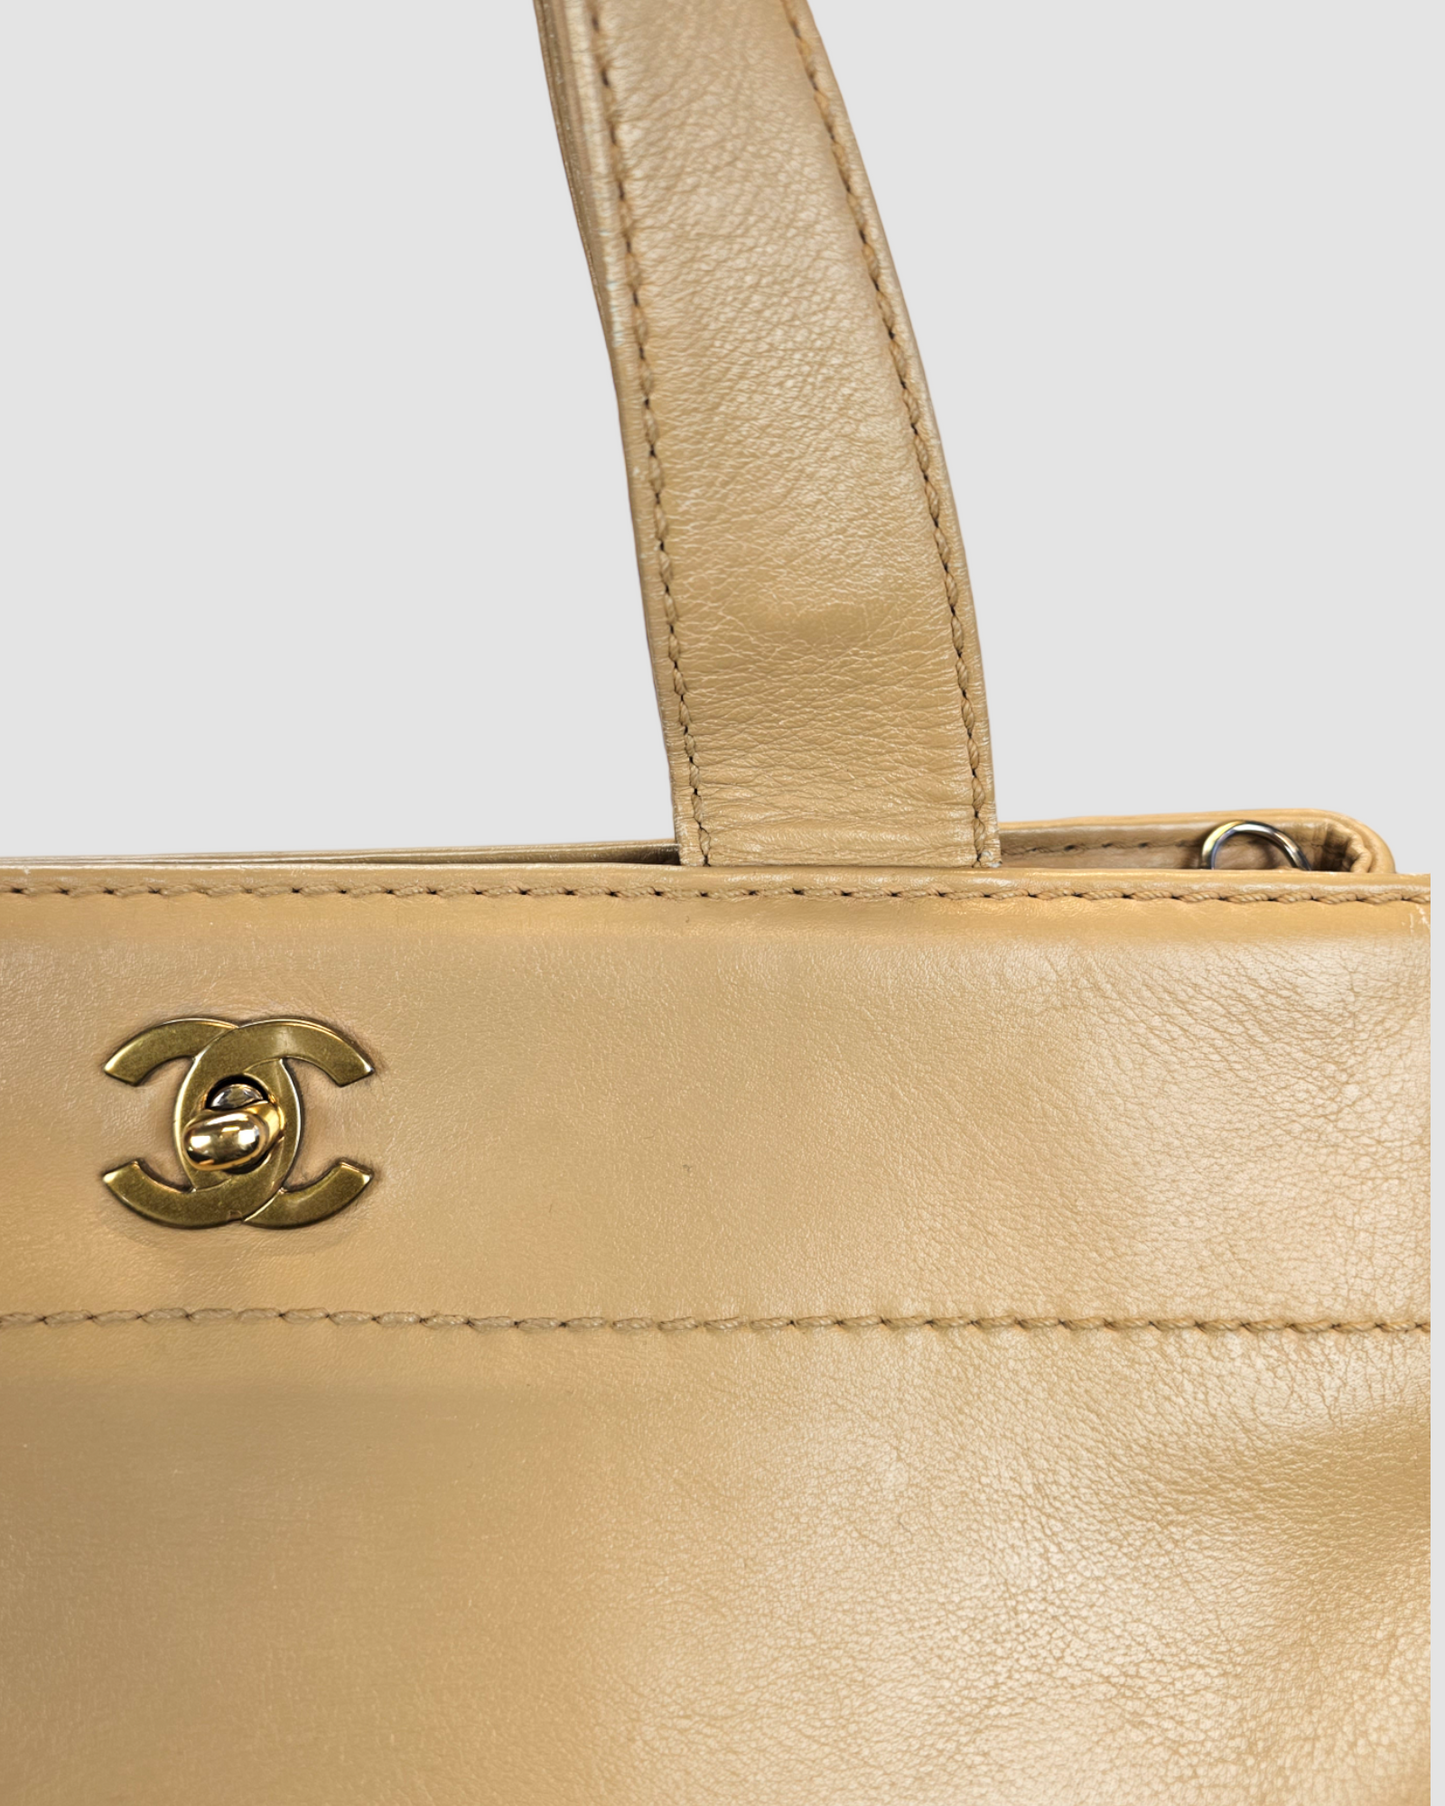 Chanel Beige Leather Handbag